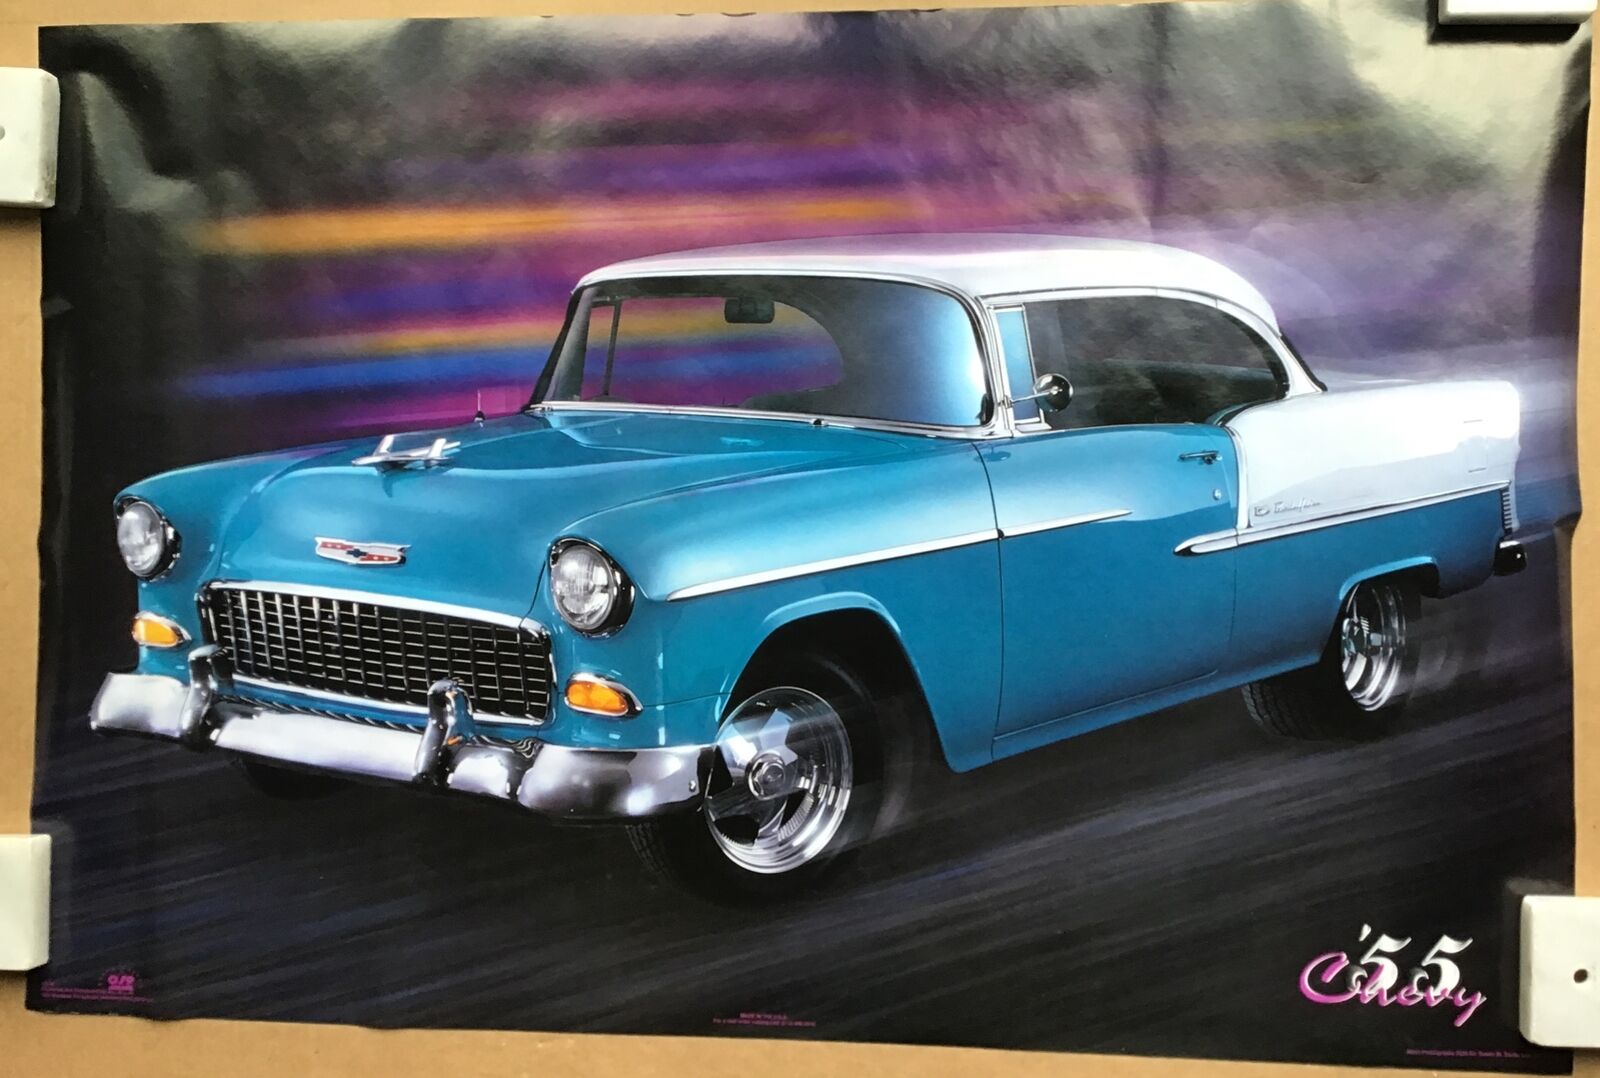 1955 Chevy BelAir Vintage Poster.